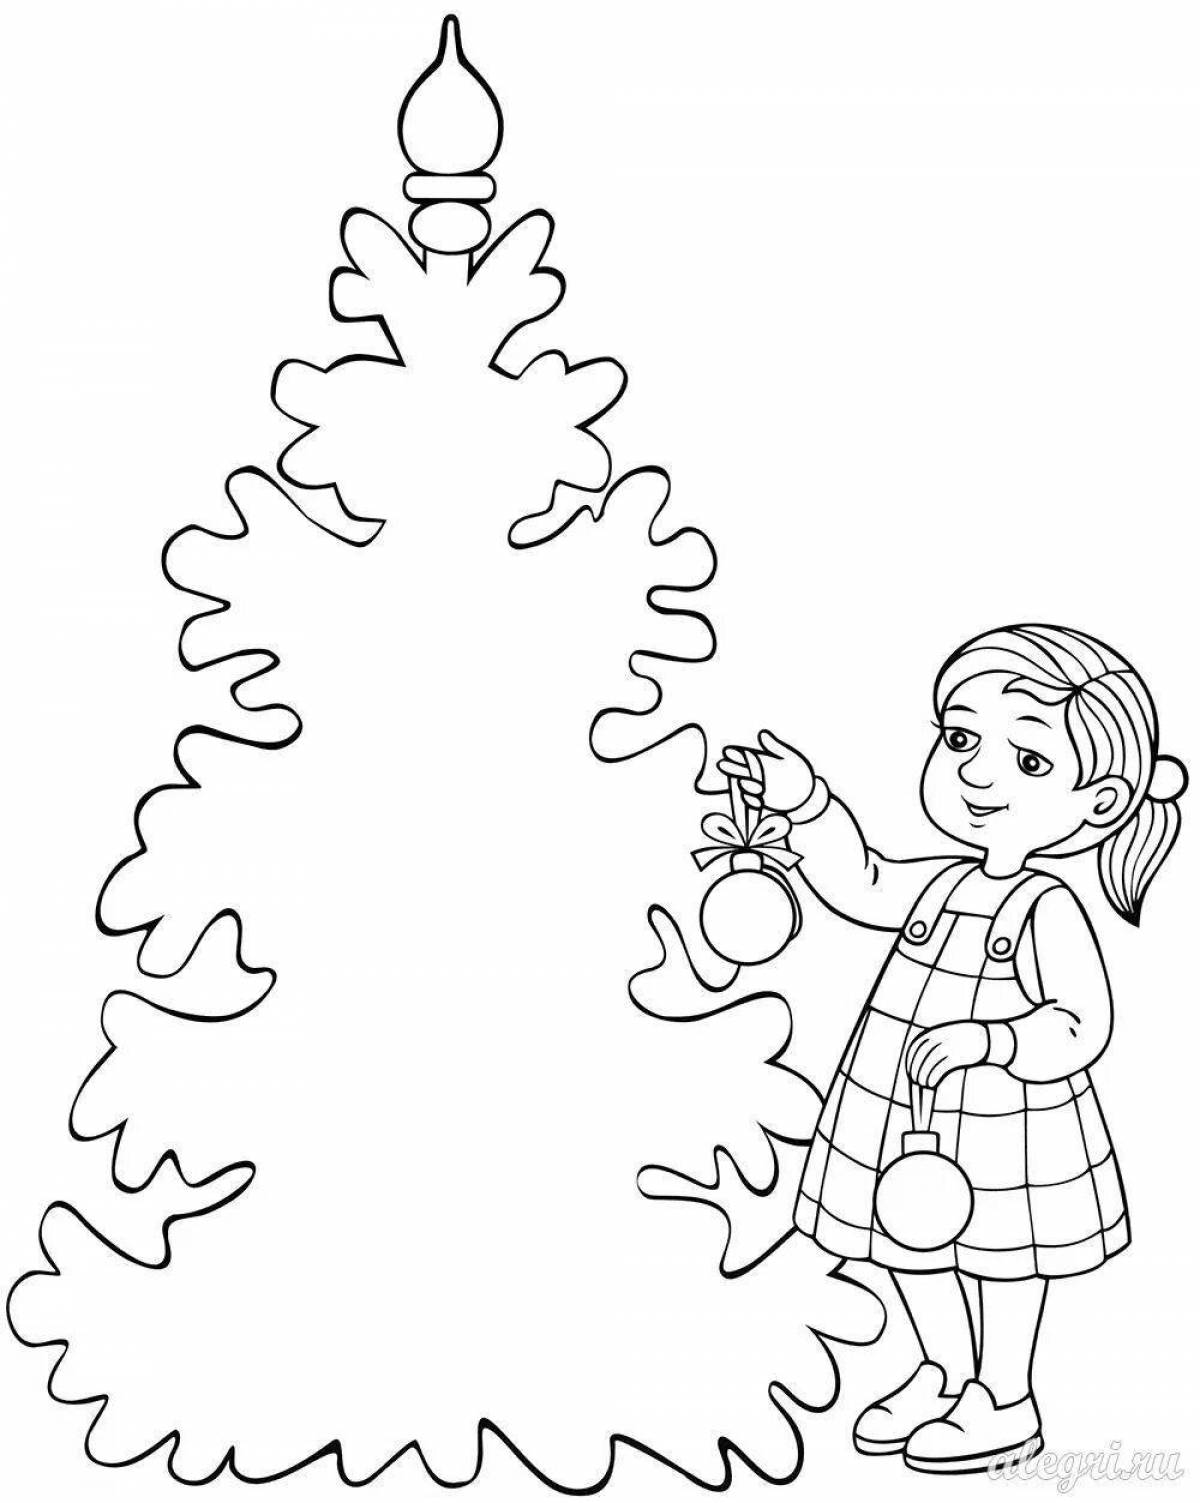 Animated children decorating the Christmas tree